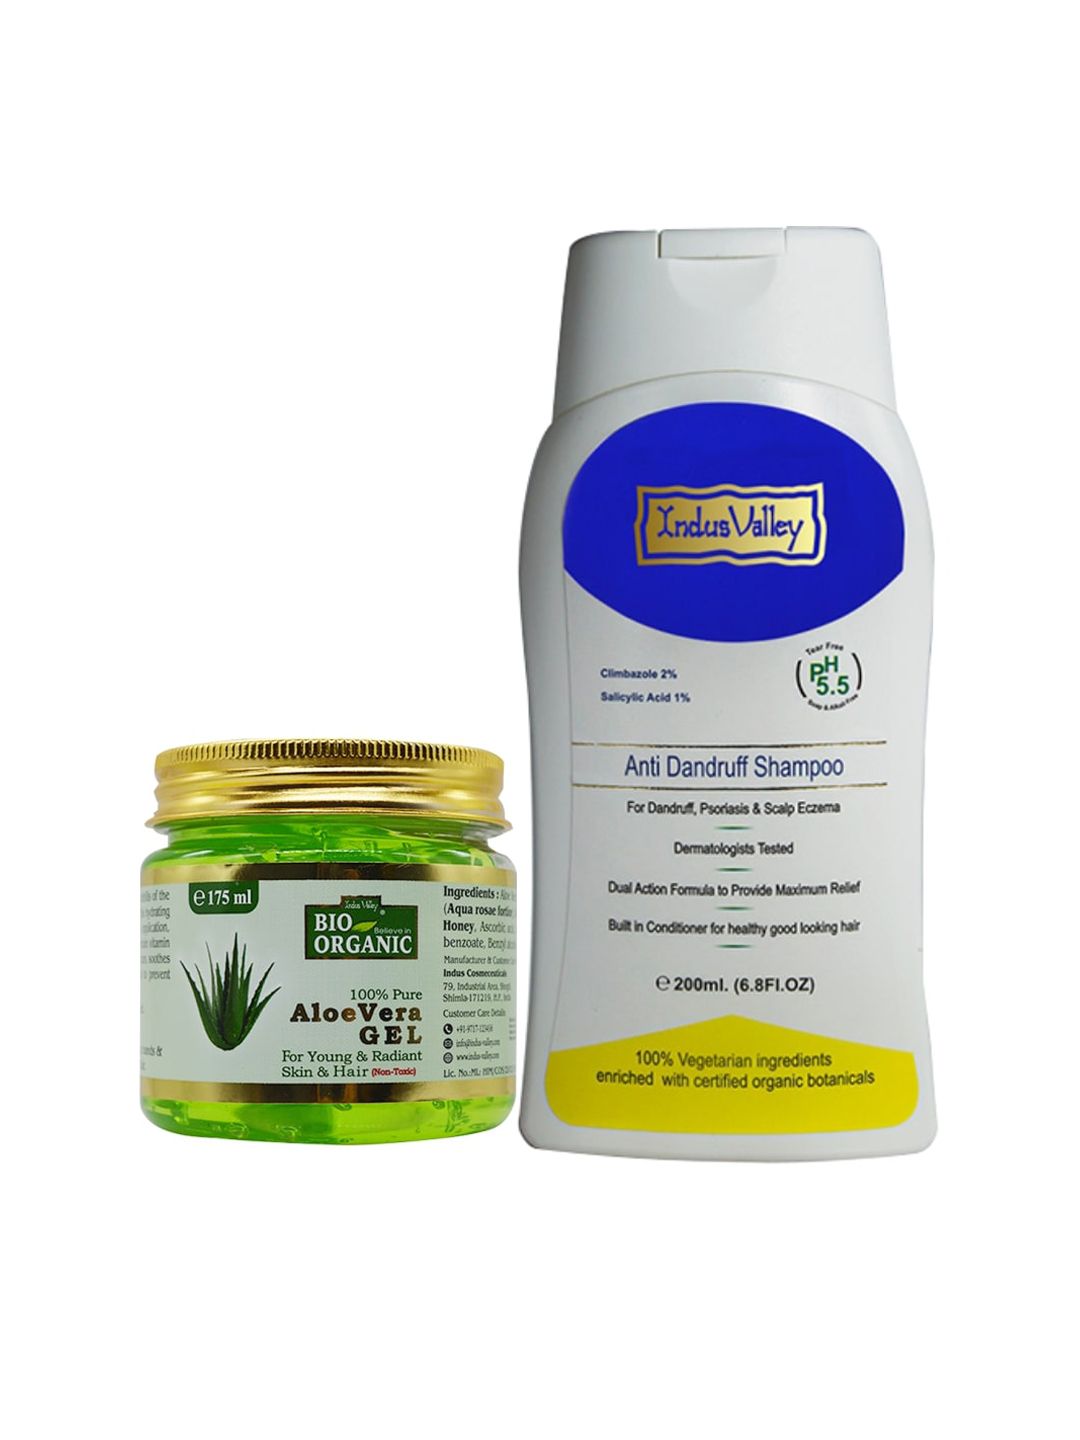 Indus valley Aloe vera gel & anti dandruff shampoo combo Price in India